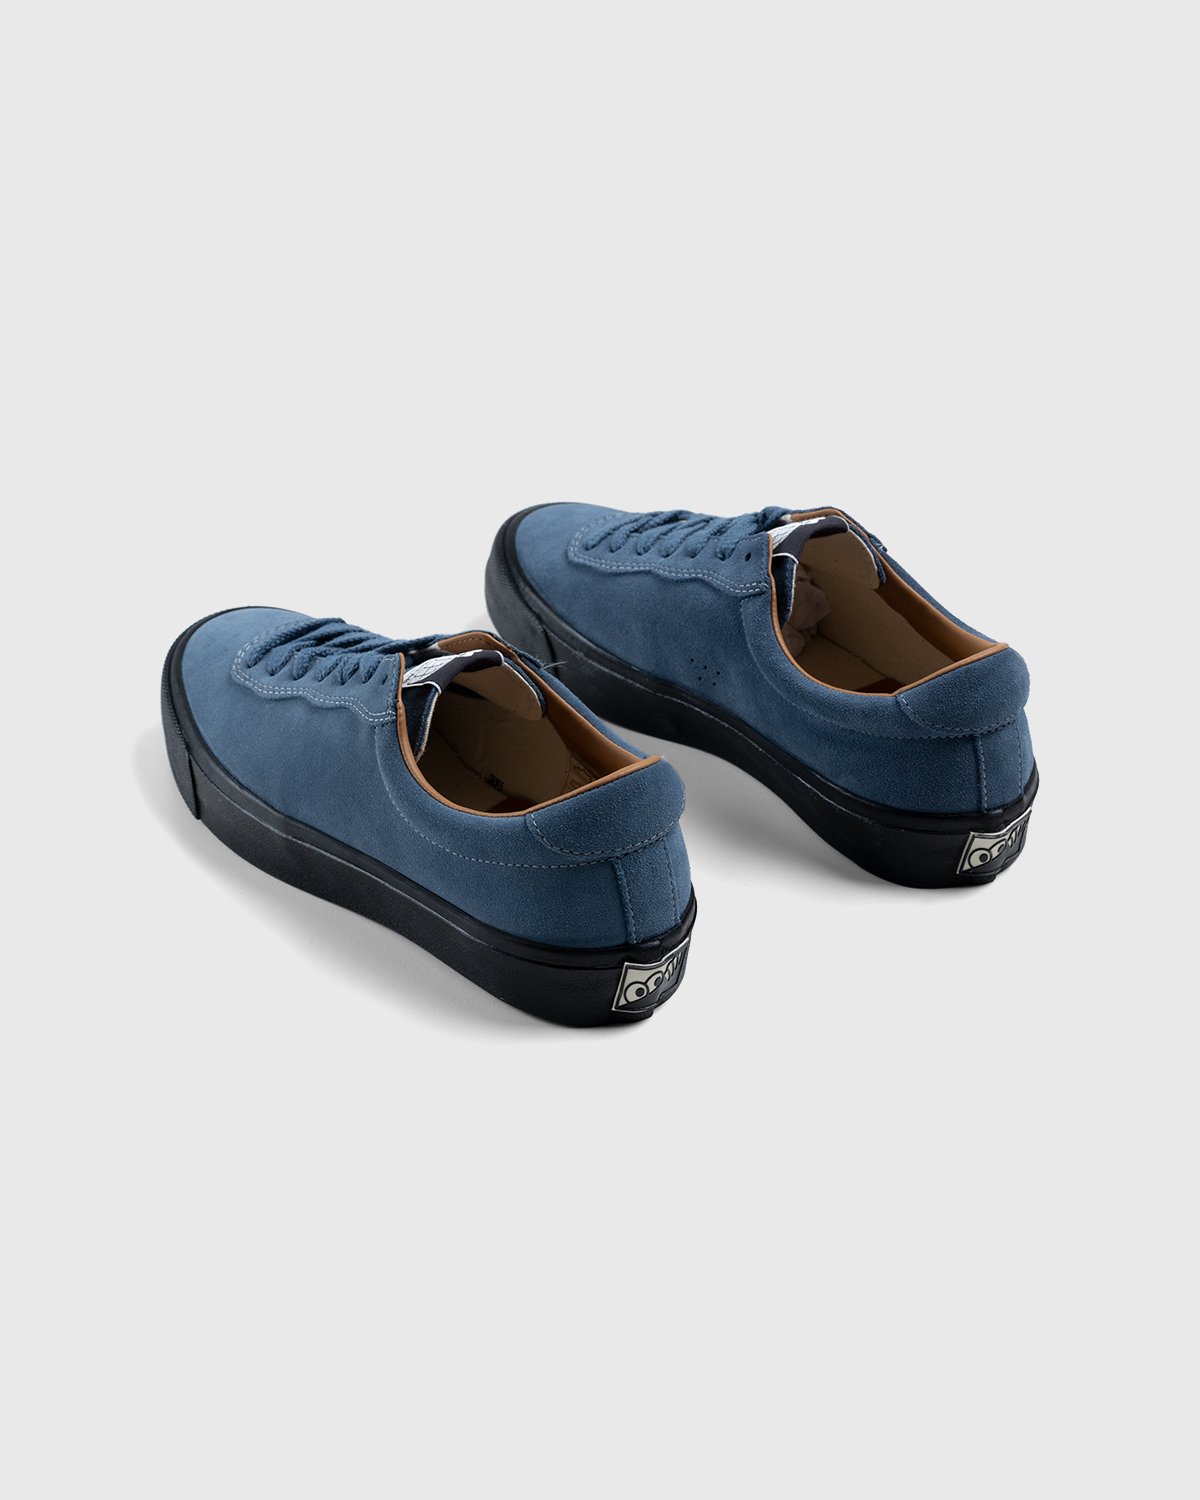 Last Resort AB - VM001 Suede Lo Blue/Black - Footwear - Blue - Image 4